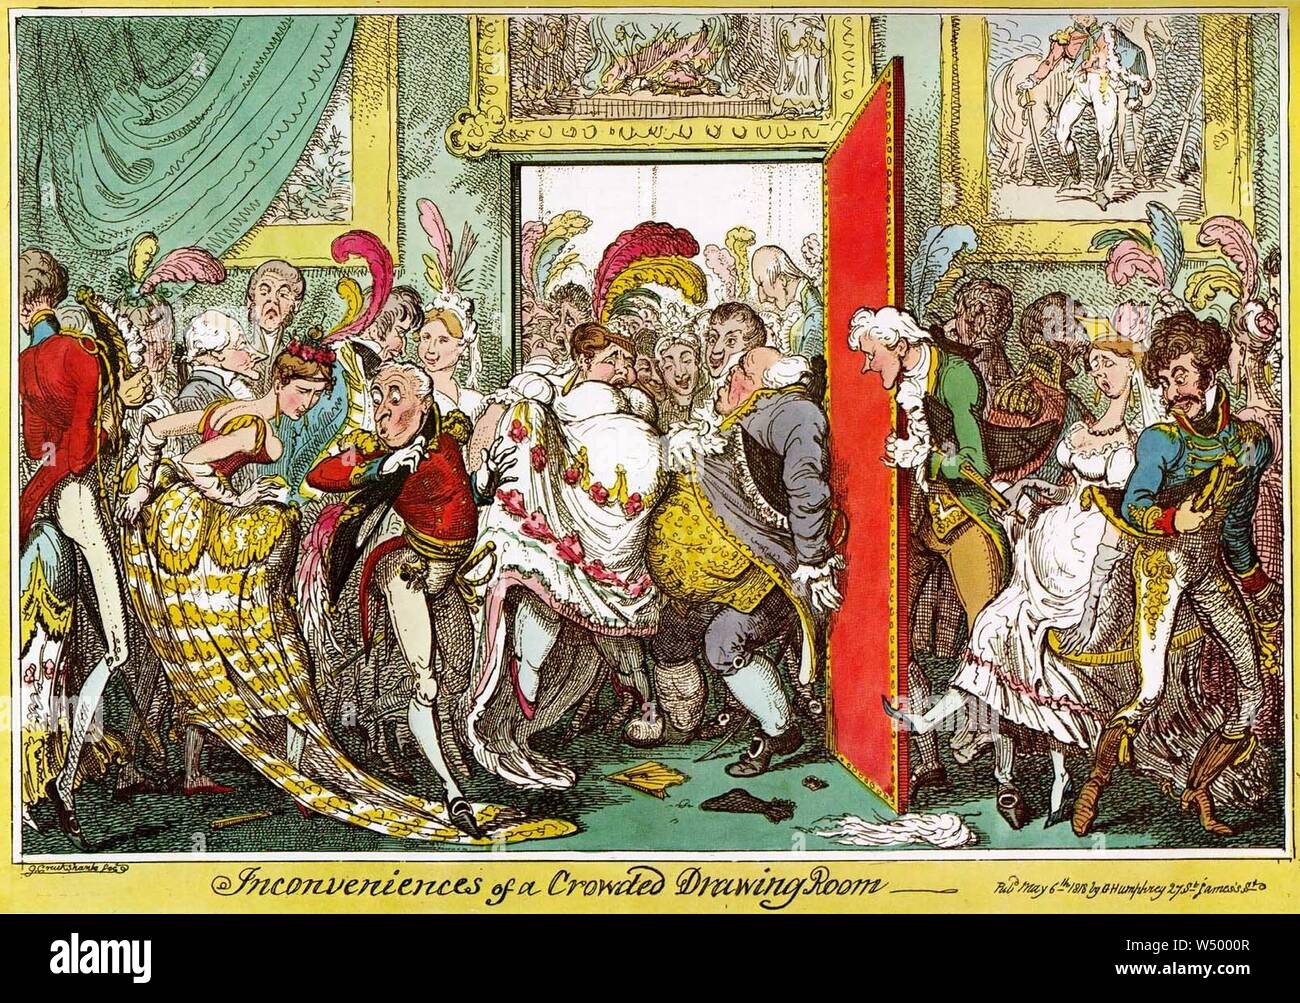 G-Cruikshank-Inconveniences - Crowded-Drawing-Zimmer-1818. Stockfoto